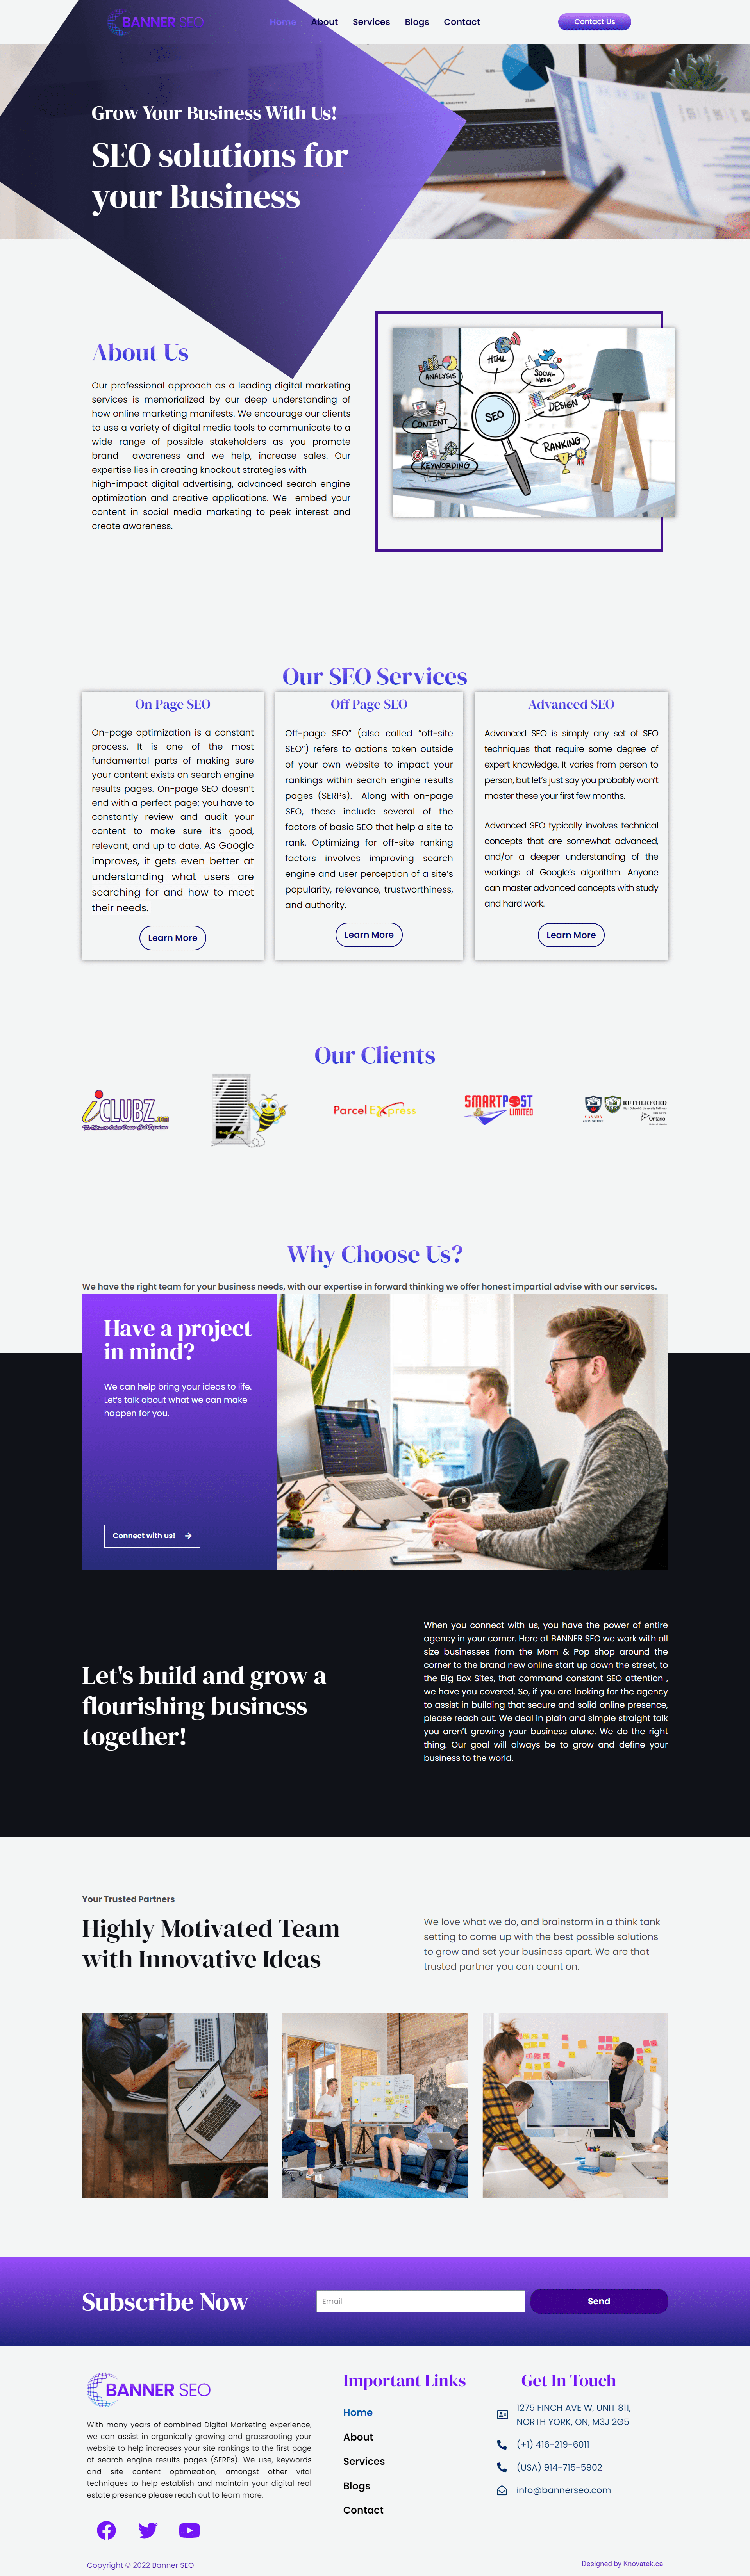 Banner SEO web design portfolio